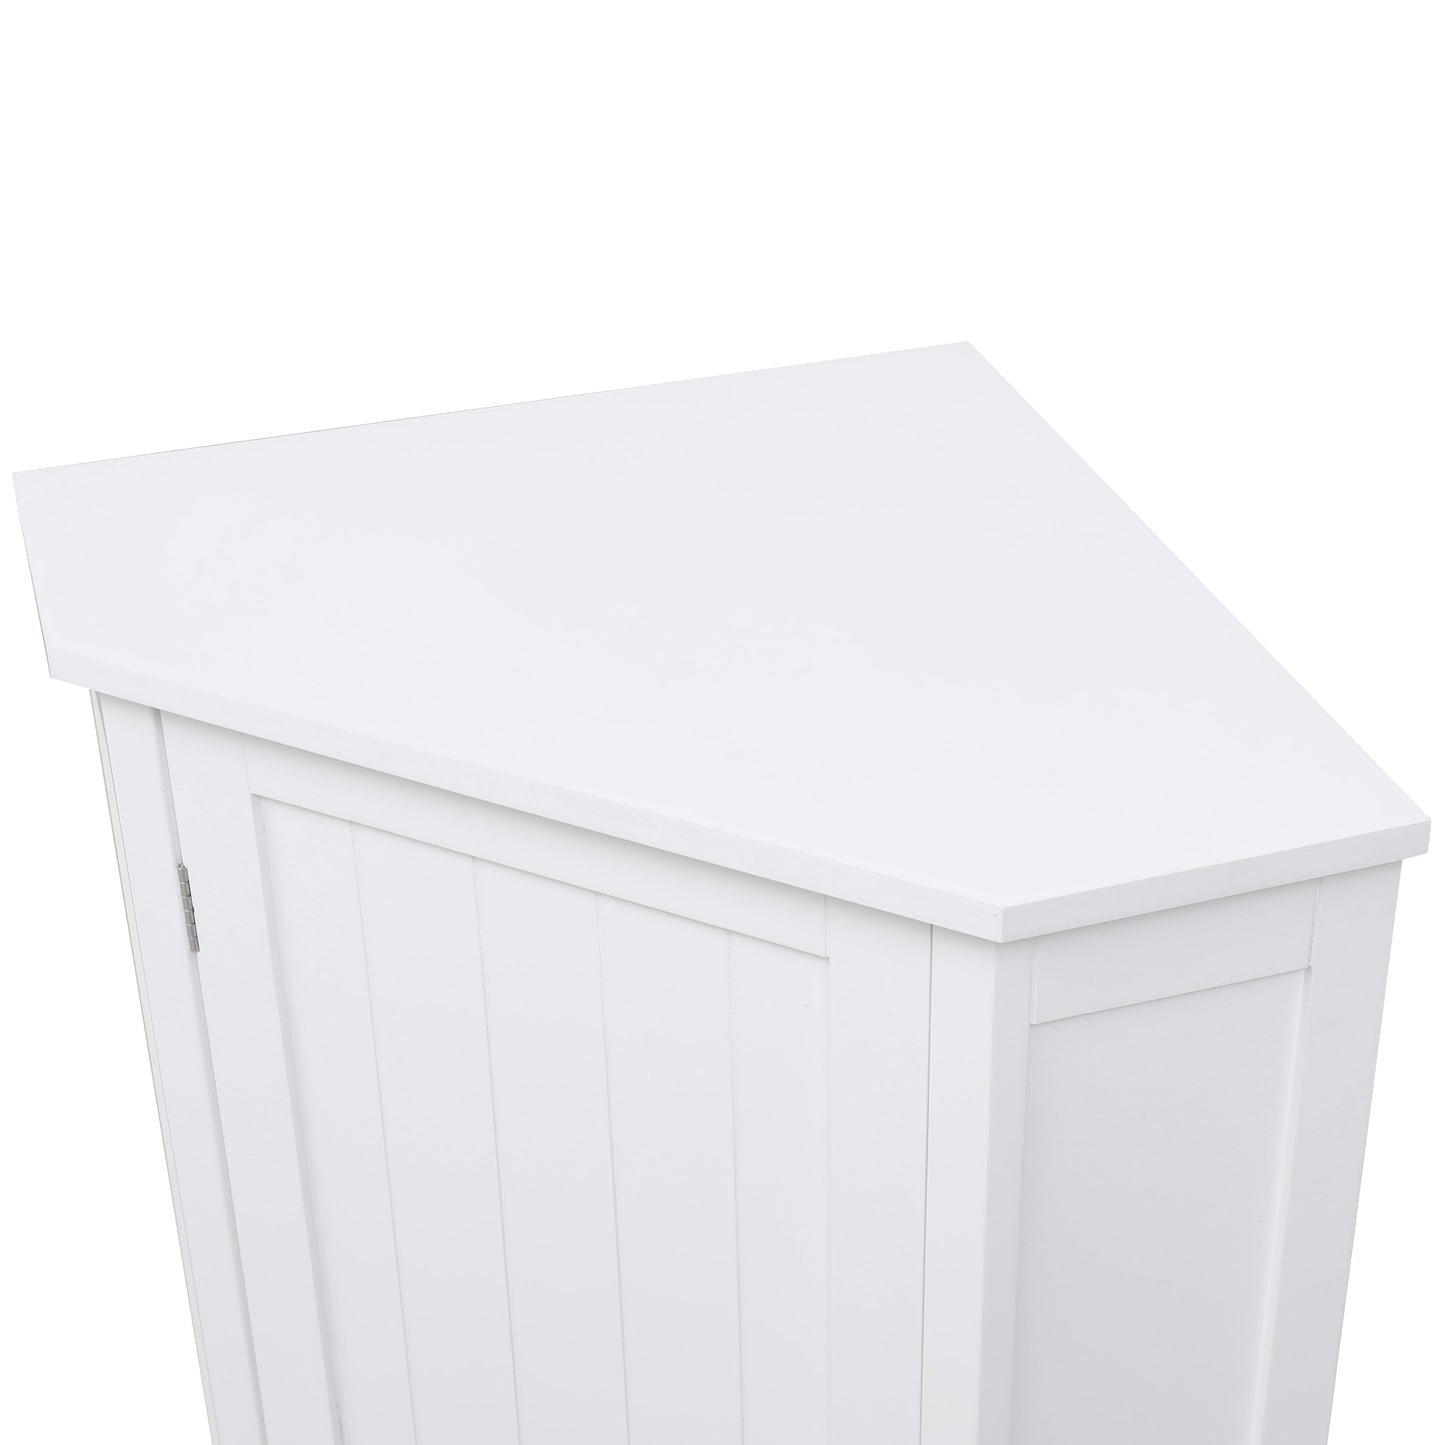 Andria White Bathroom Triangle Corner Storage Cabinet with Shelf Modern Style